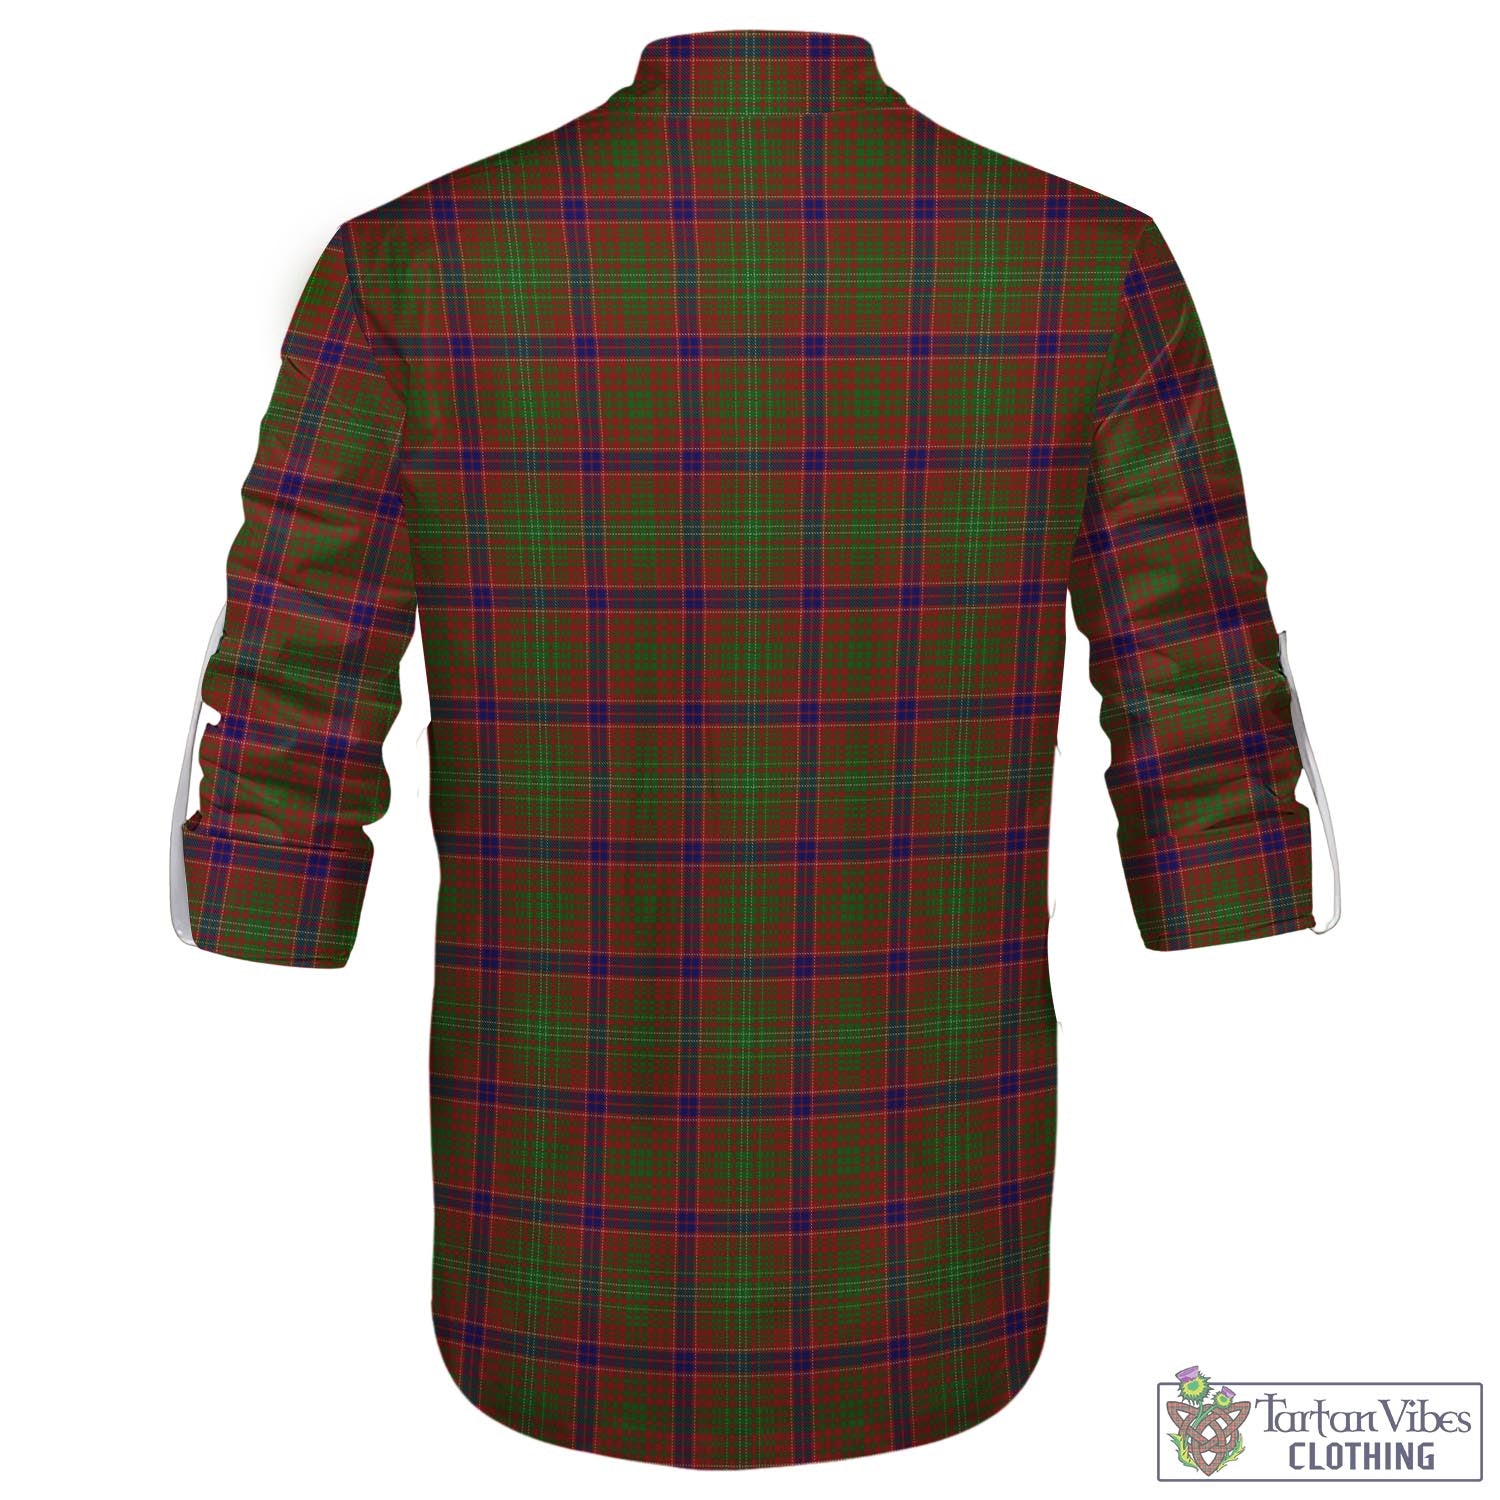 Tartan Vibes Clothing Lumsden Tartan Men's Scottish Traditional Jacobite Ghillie Kilt Shirt